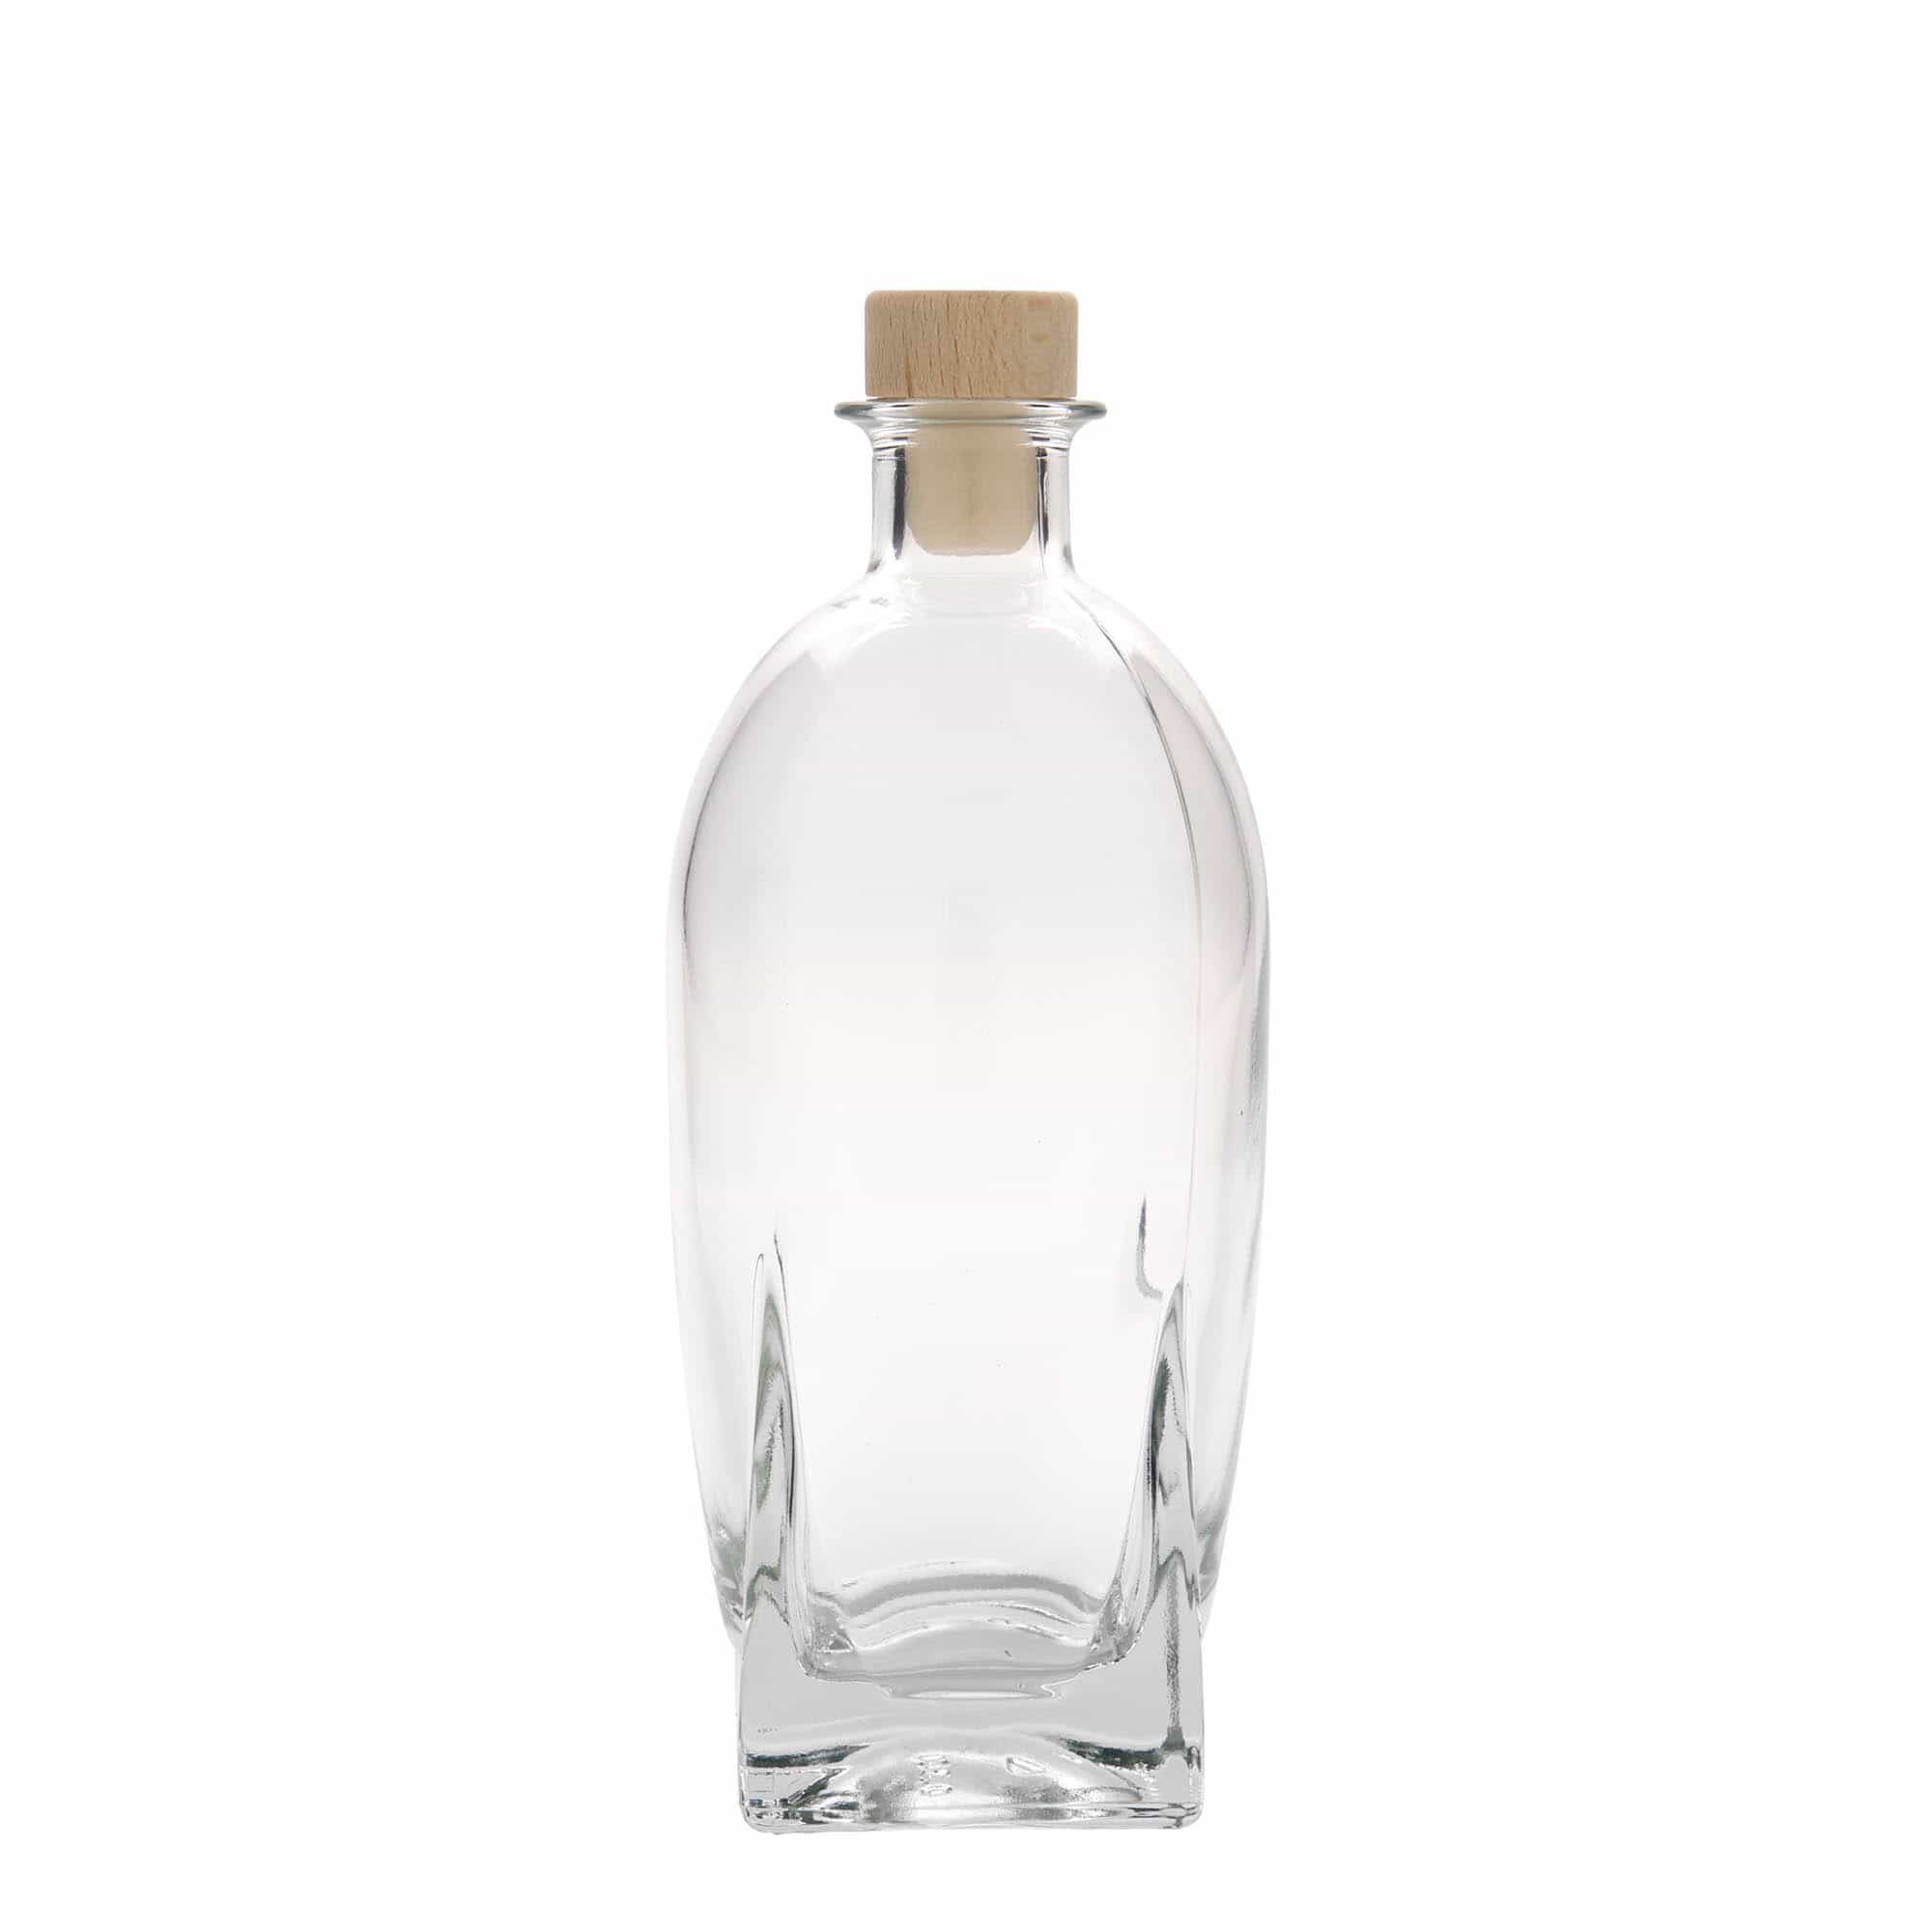 500 ml glass bottle 'Zino', square, closure: cork